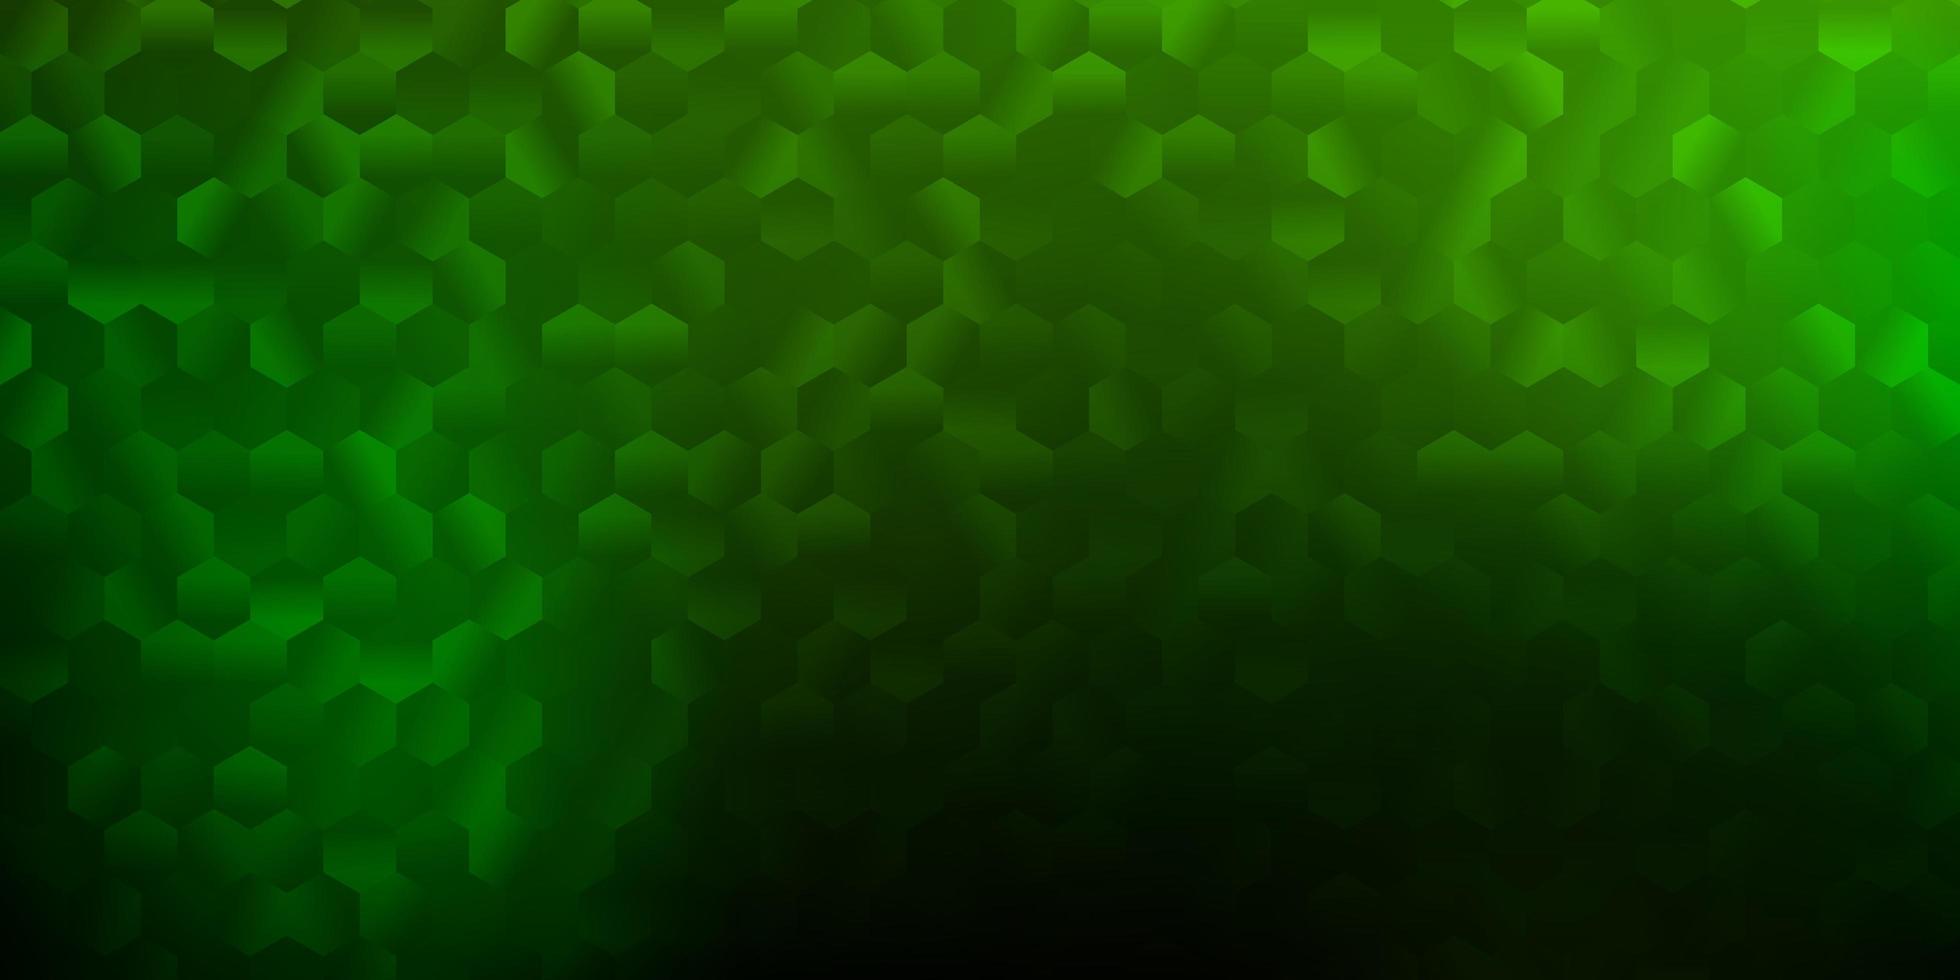 modelo de vetor verde escuro em estilo hexagonal.